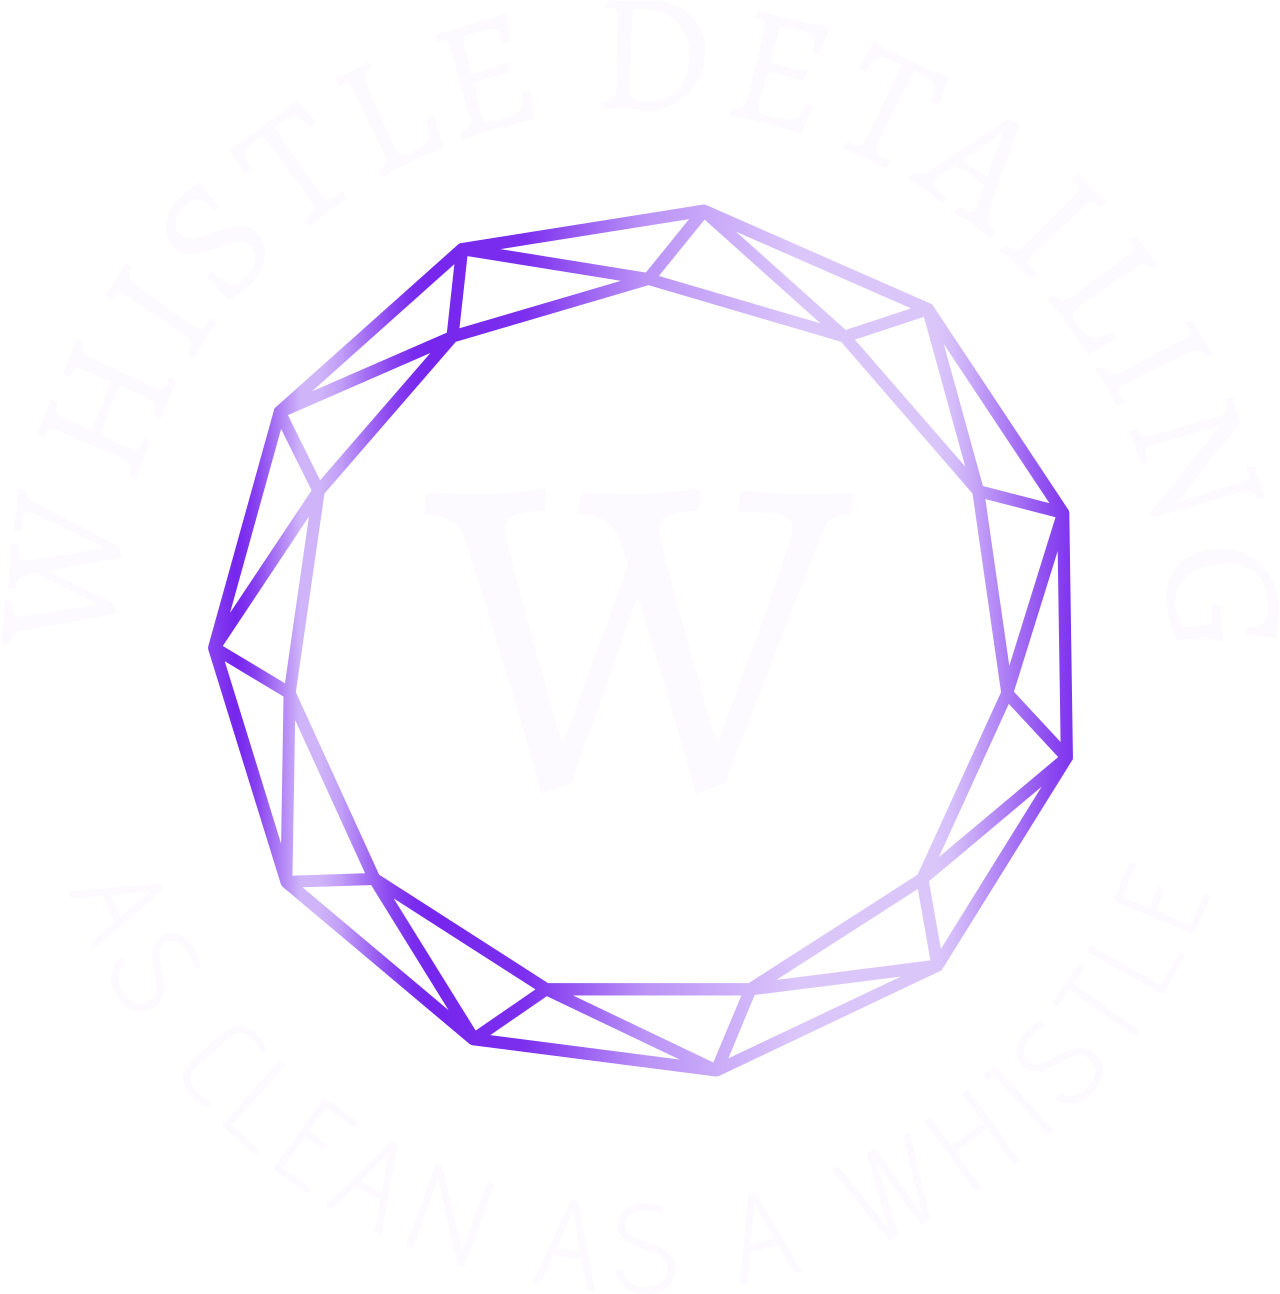 WHISTLE DETAILING's logo